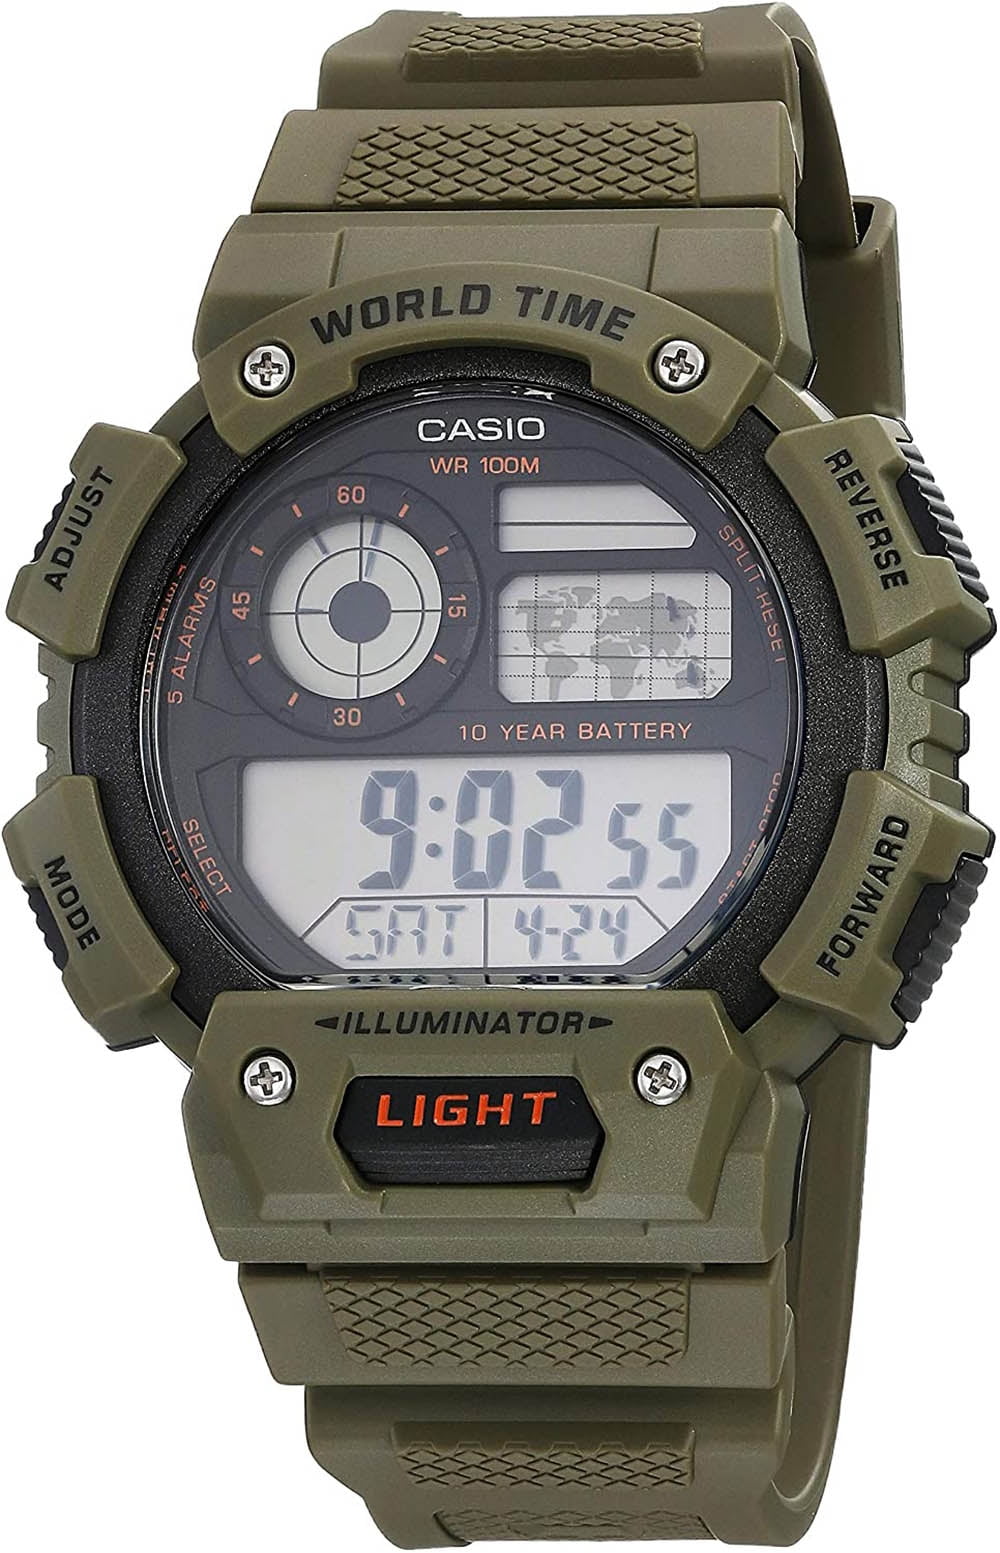 Casio Men's Classic Digital World Time Watch, Black/Gold - AE1400WH-9AV 